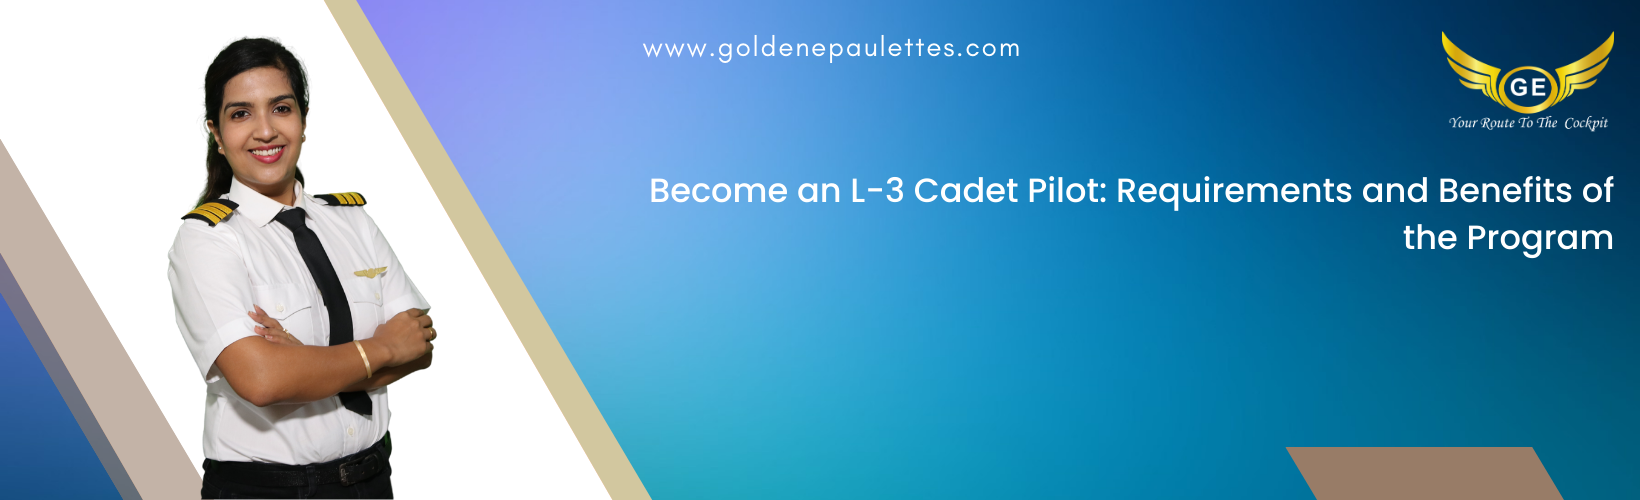 Introduction to the L-3 Cadet Pilot Program